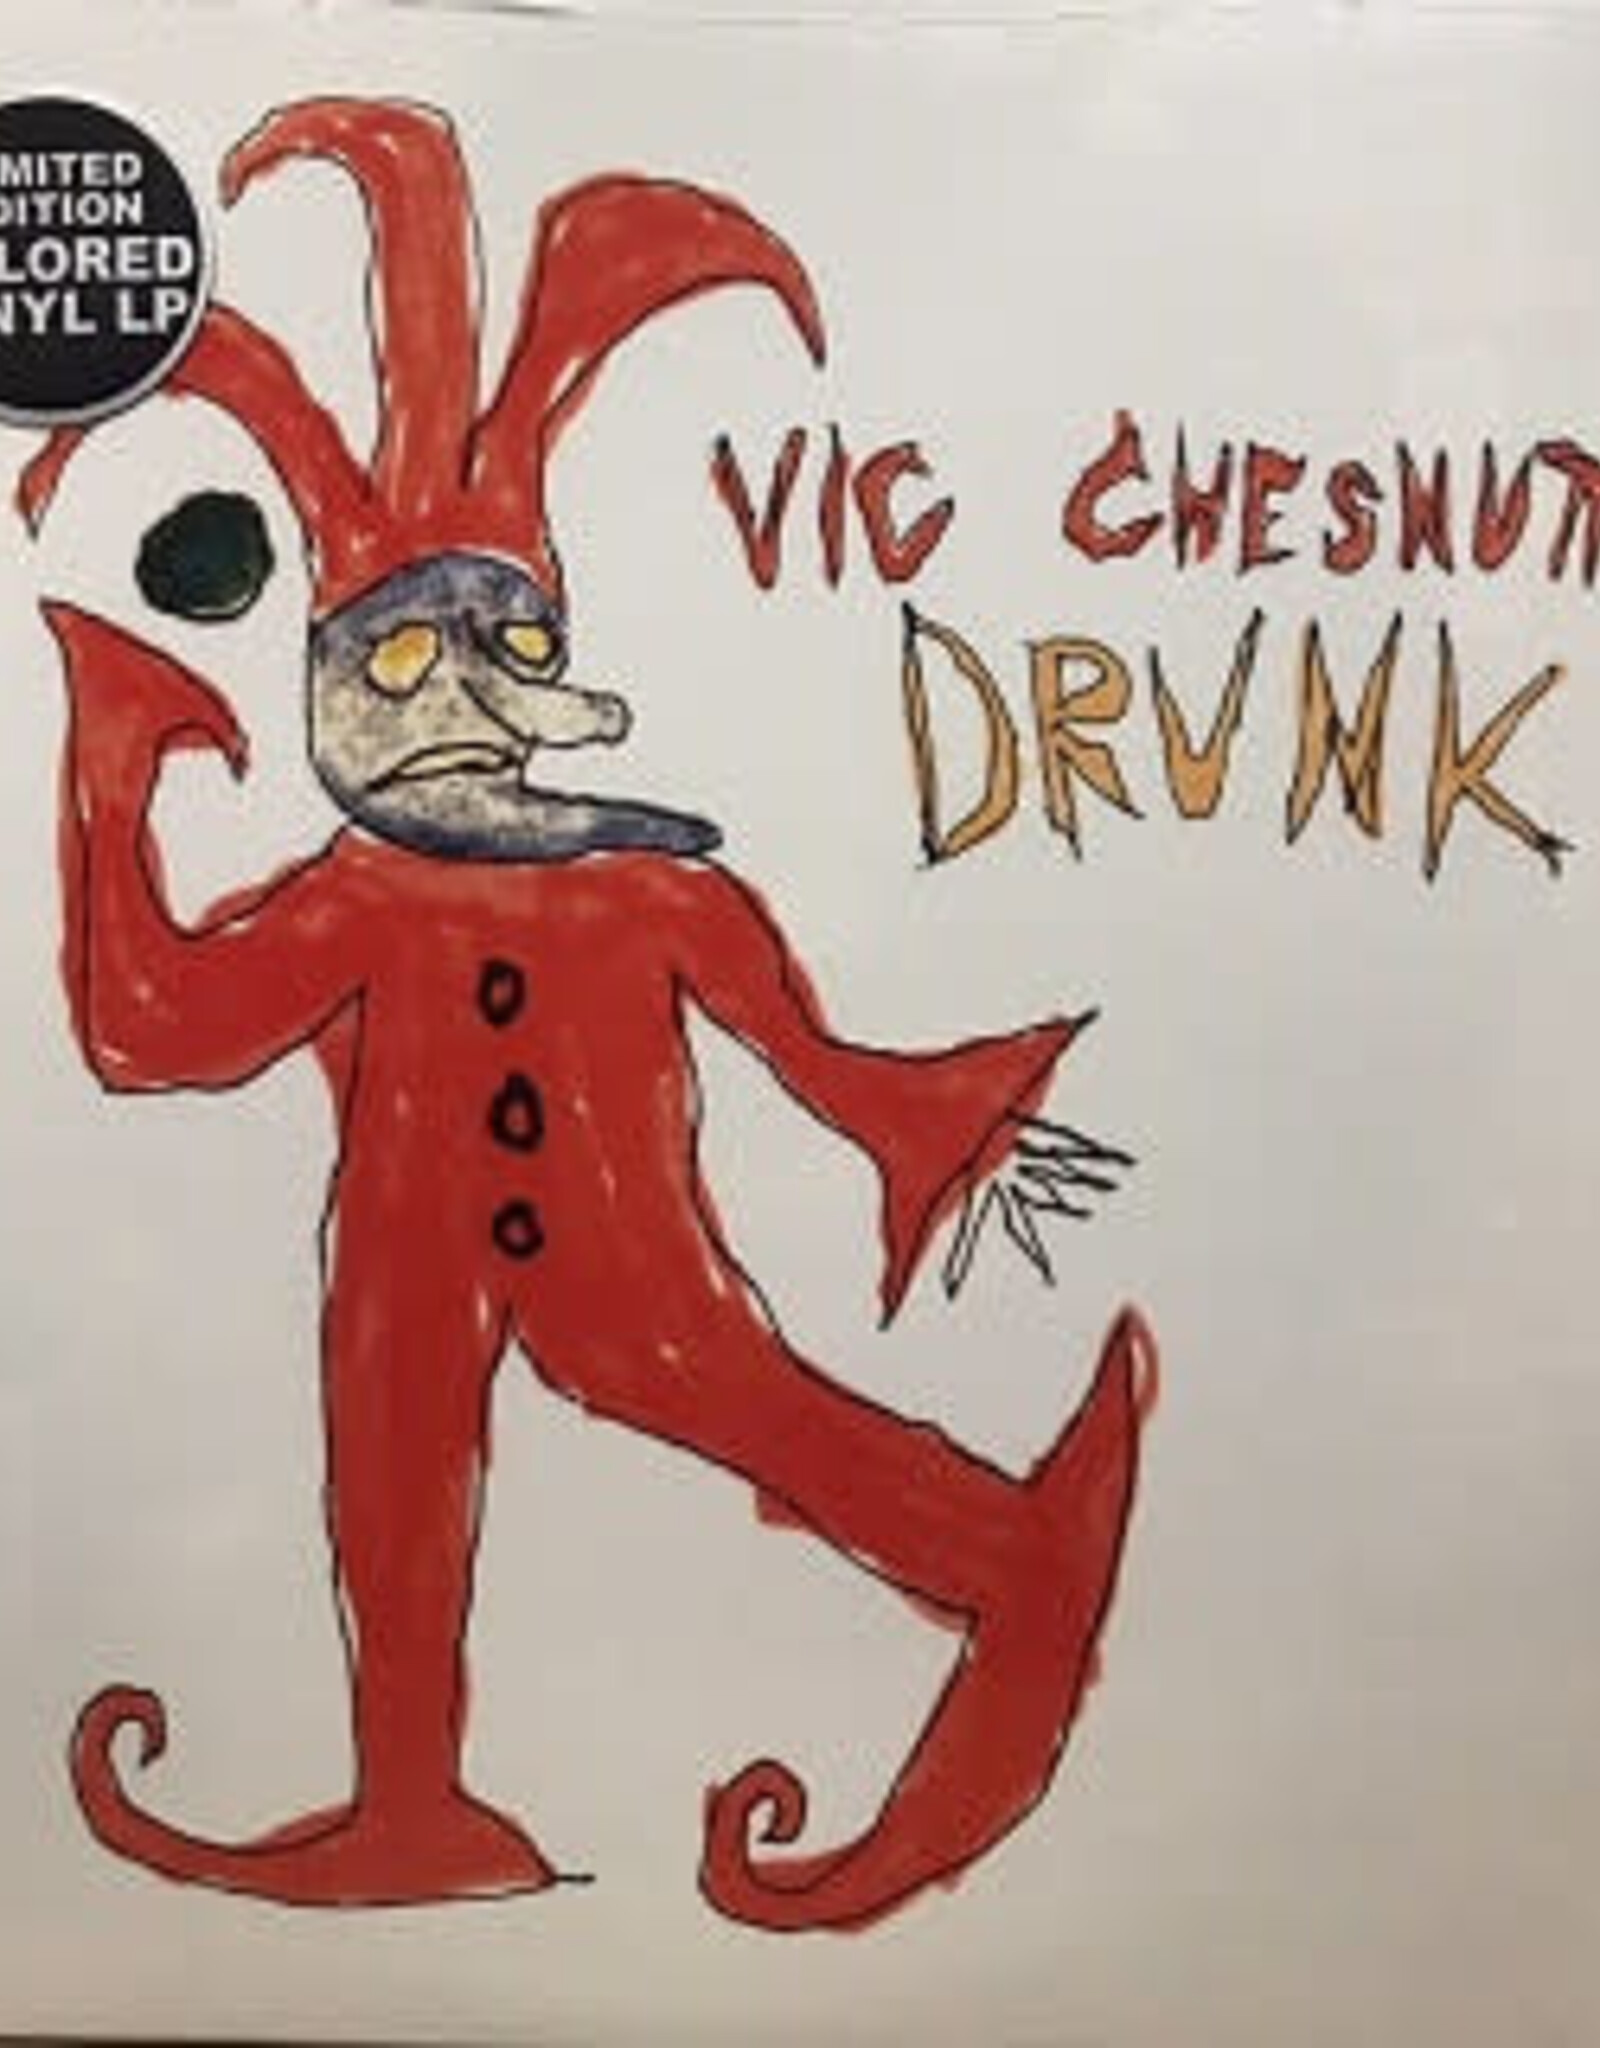 Vic Chesnutt - Drunk (Limited Edition, Red and Orange Split Color Vinyl)